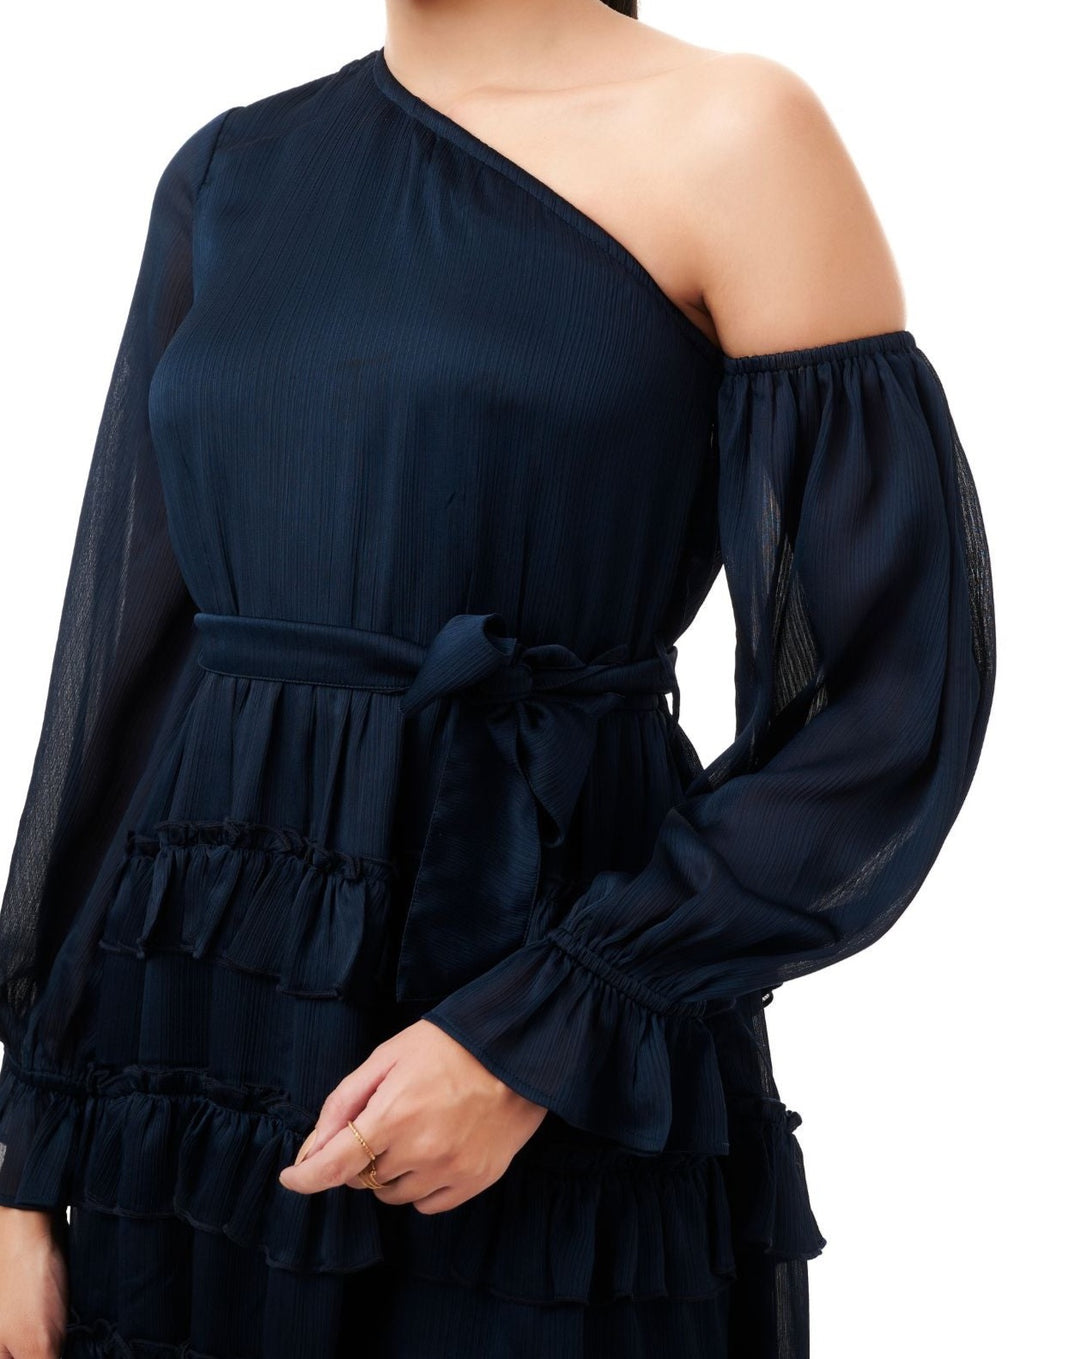 Azula One-Shoulder Short Dress